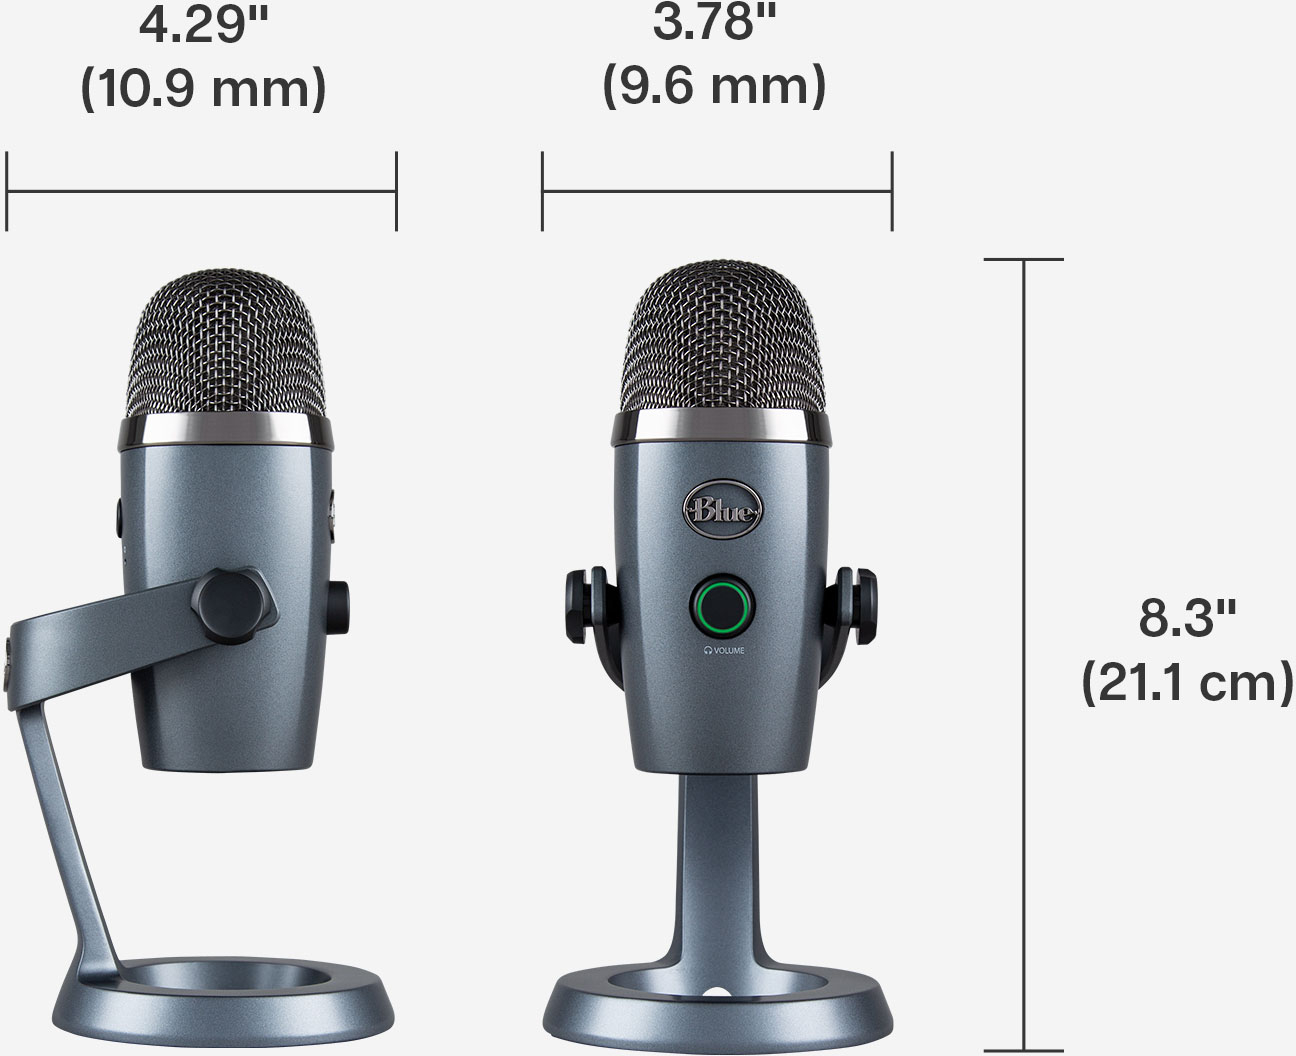 Blue Yeti v Blue Yeti Pro USB Microphone Head To Head Comparison 